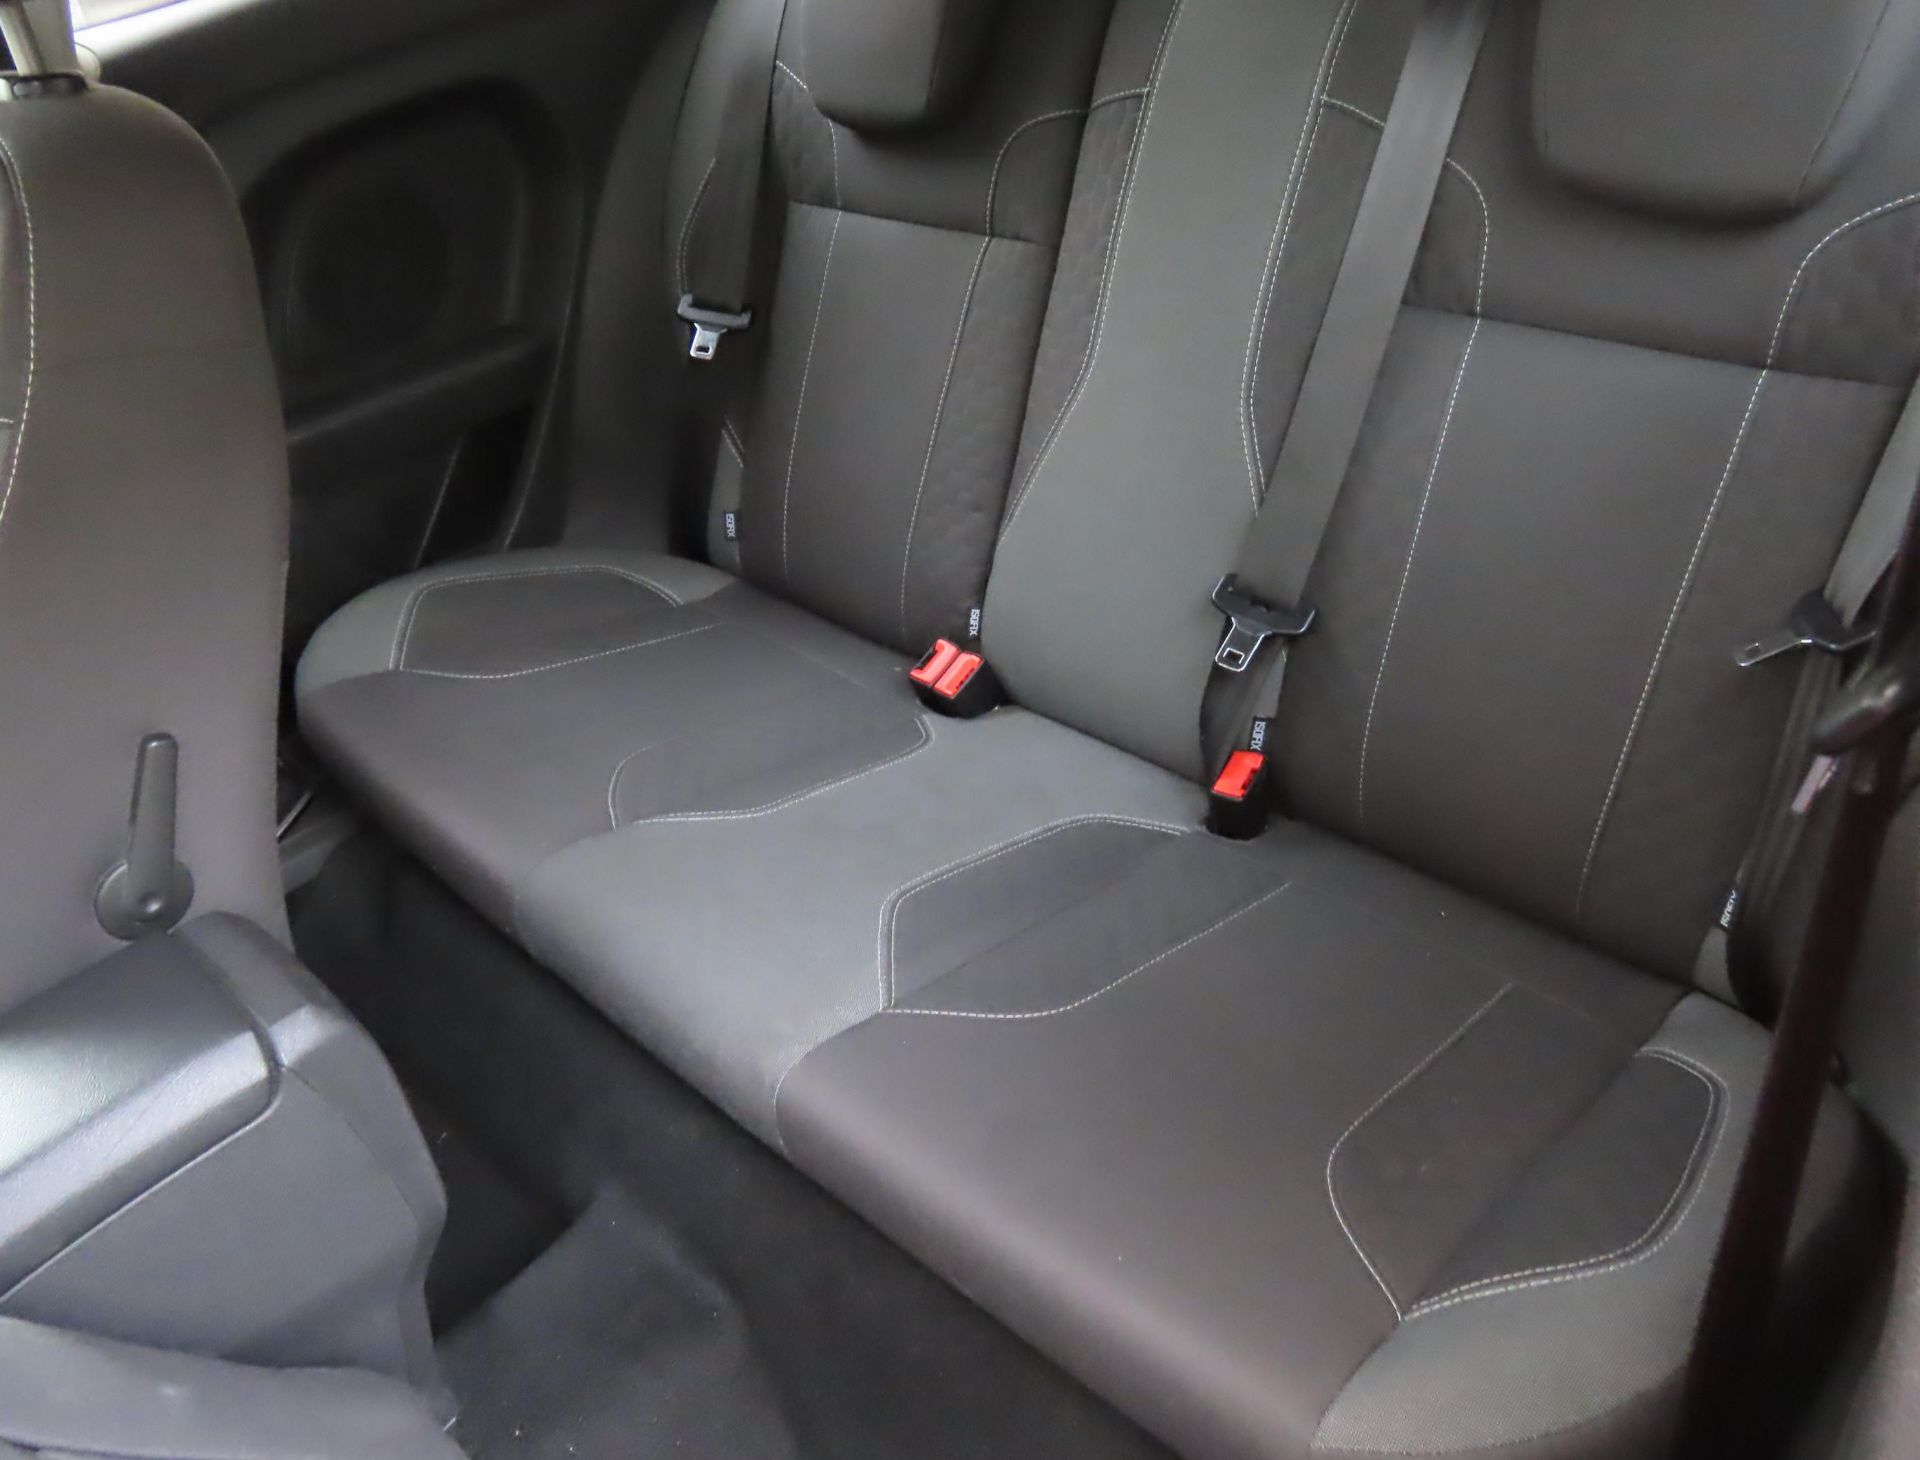 2014 Ford Fiesta 1.0 Zetec S 5 Door Hatchback - FULL SERVICE HISTORY - CL505 - NO VAT ON THE HAMMER - Image 9 of 12